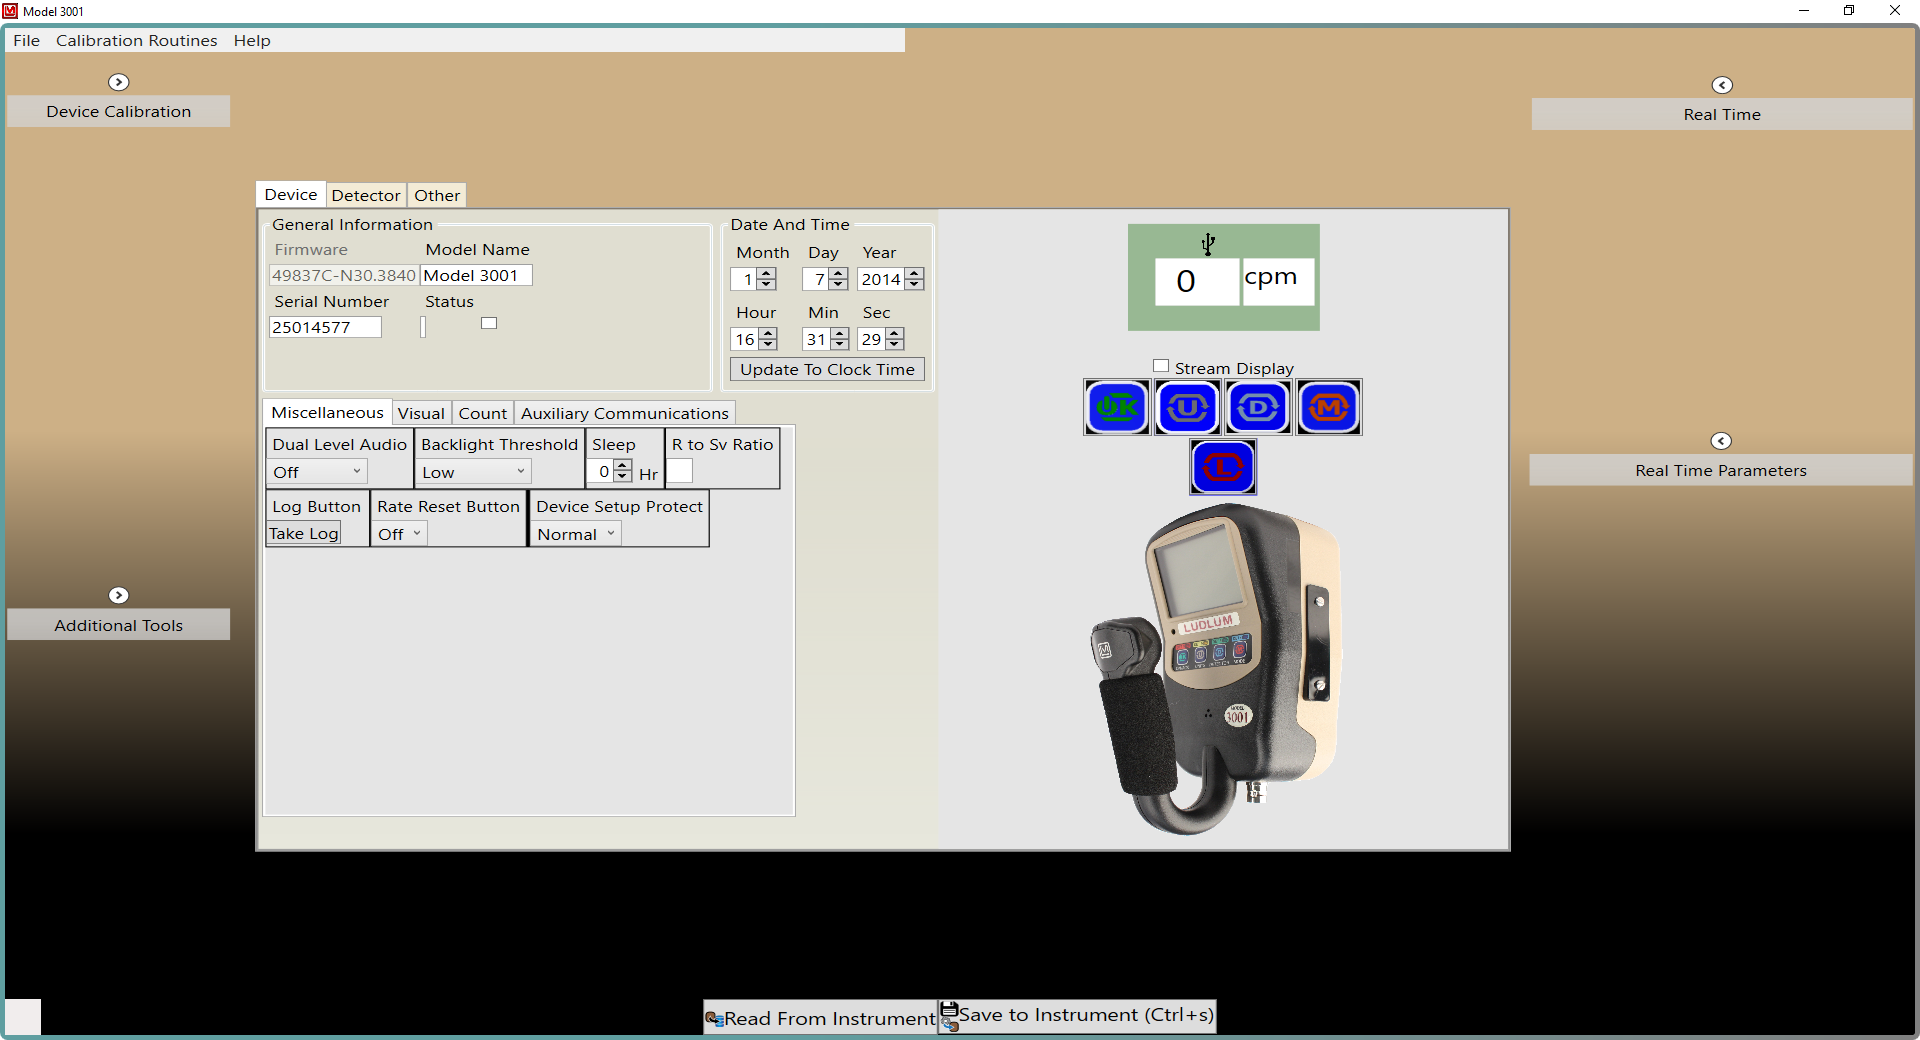 Lumic 1 Calibration Software Screenshot for Model 3000 Series